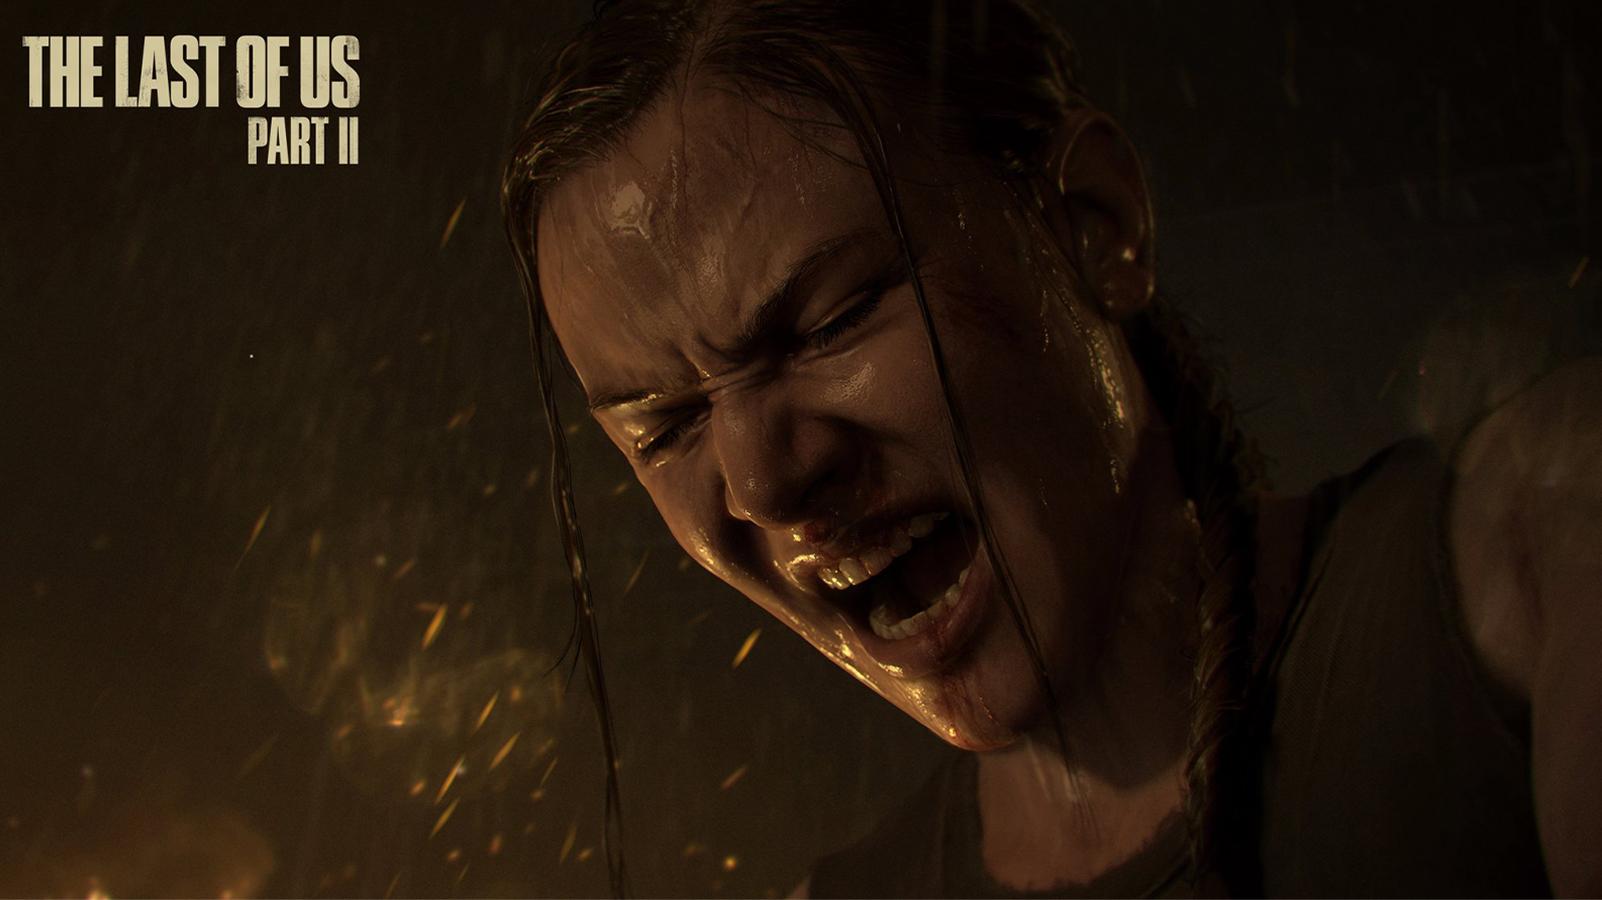 The Last of Us' creator Neil Druckmann previews season 2